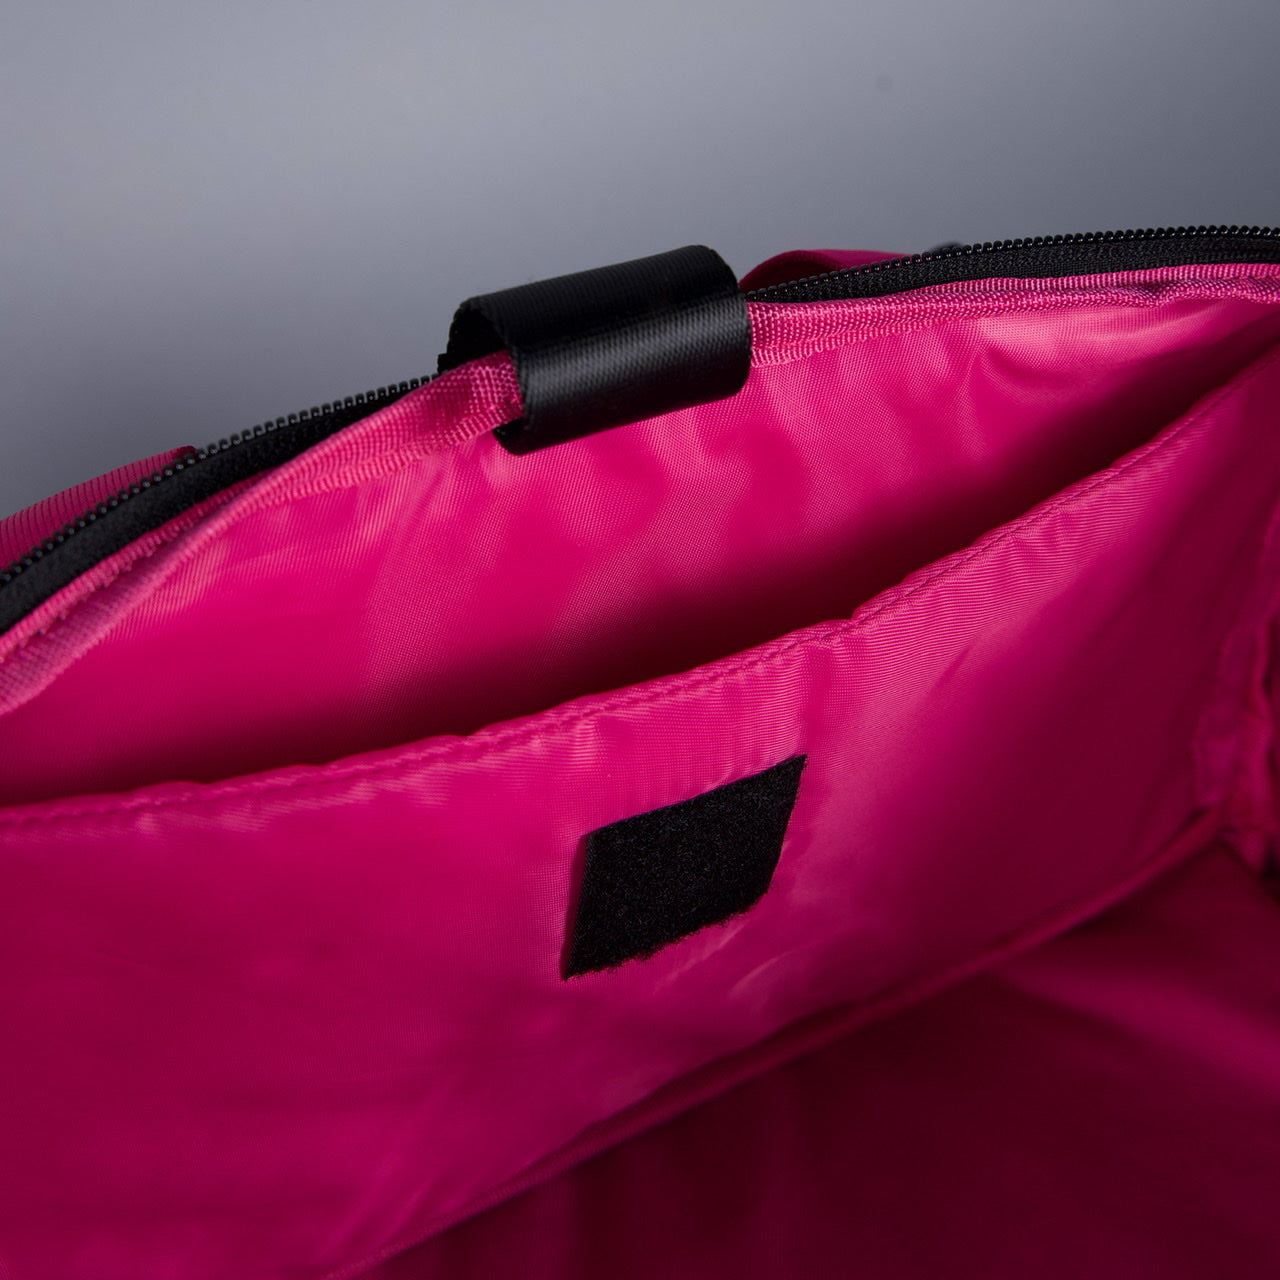 20L Mini Duffle Bag Voodoo Pink